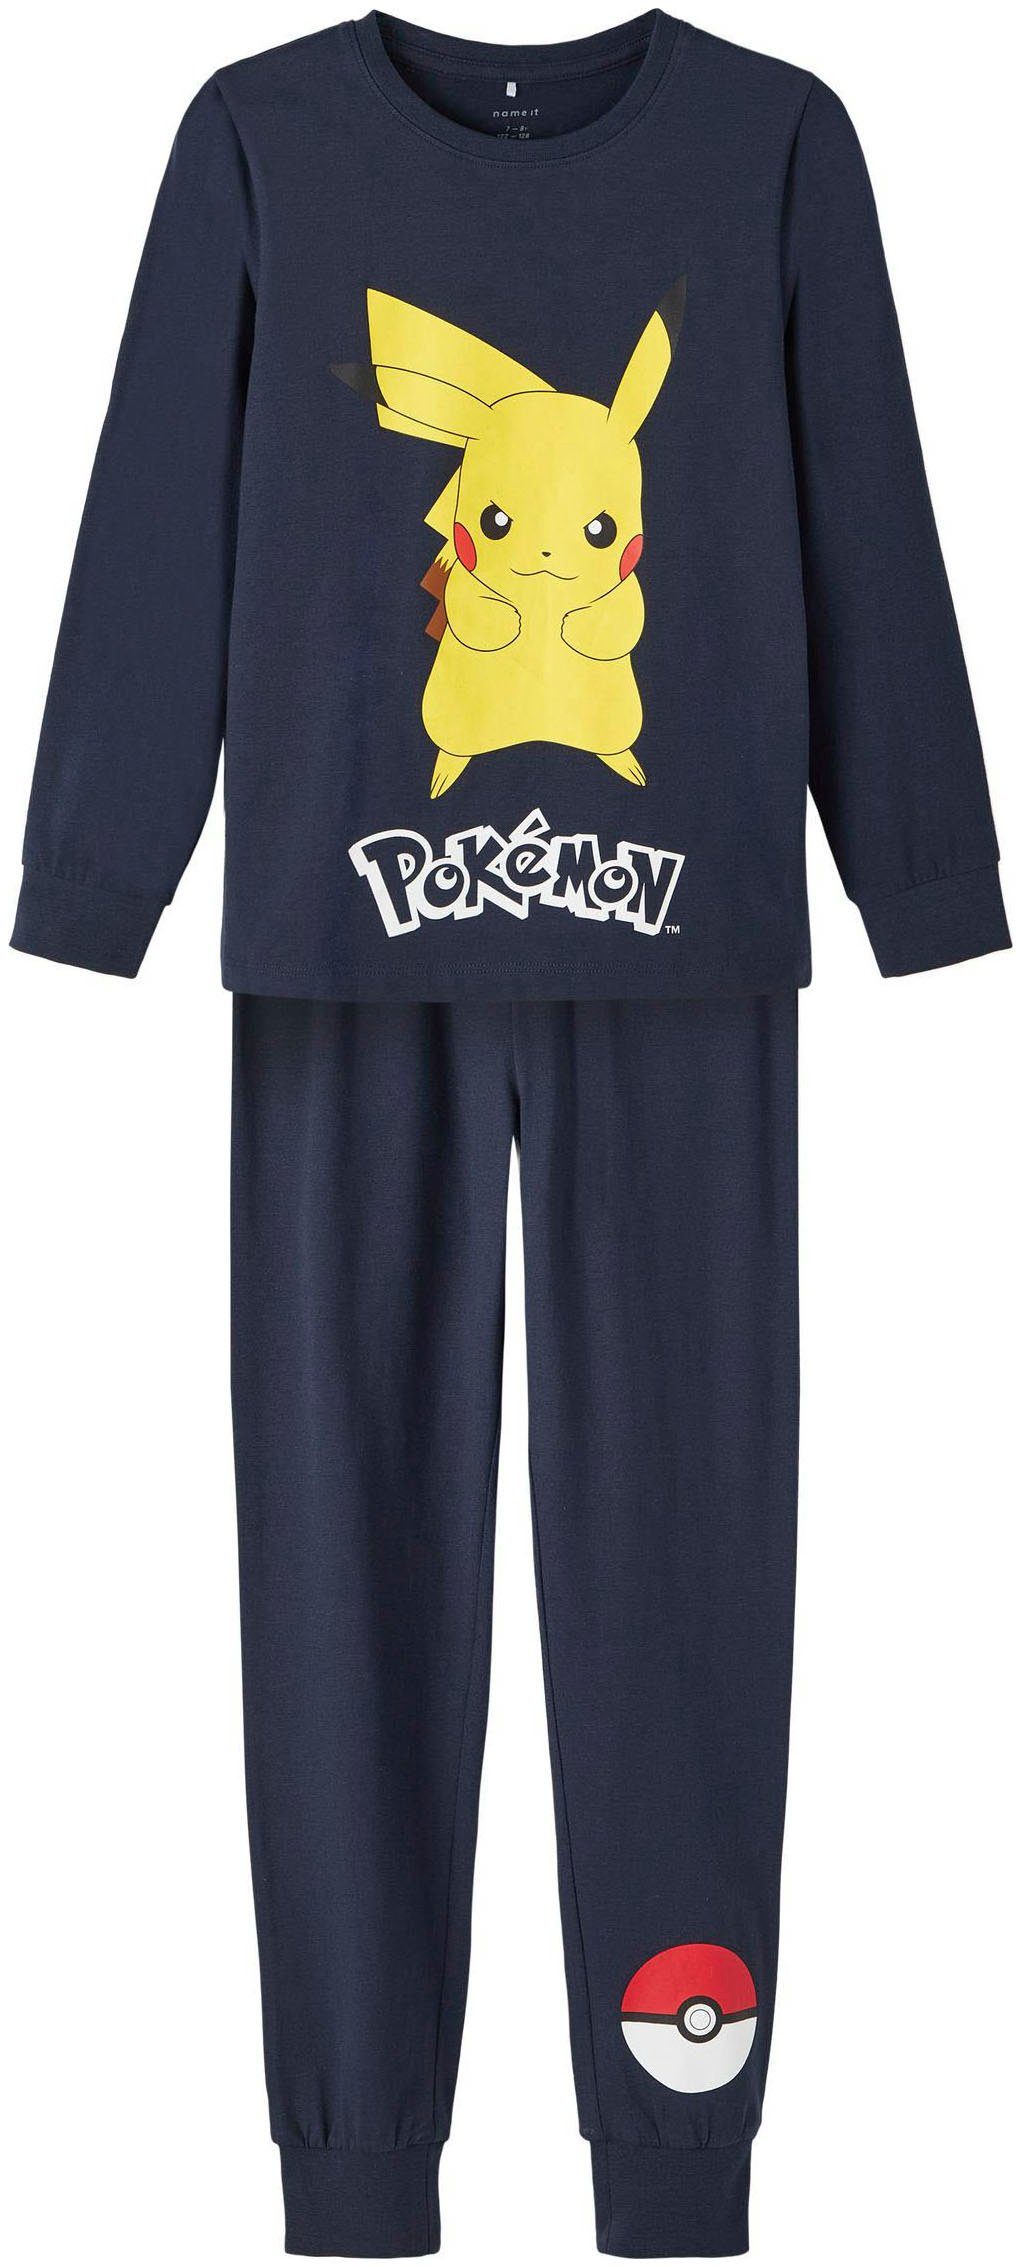 | POKEMON Name Pyjama NIGHTSET It online OTTO SKY shop LS NOOS NKMNASH